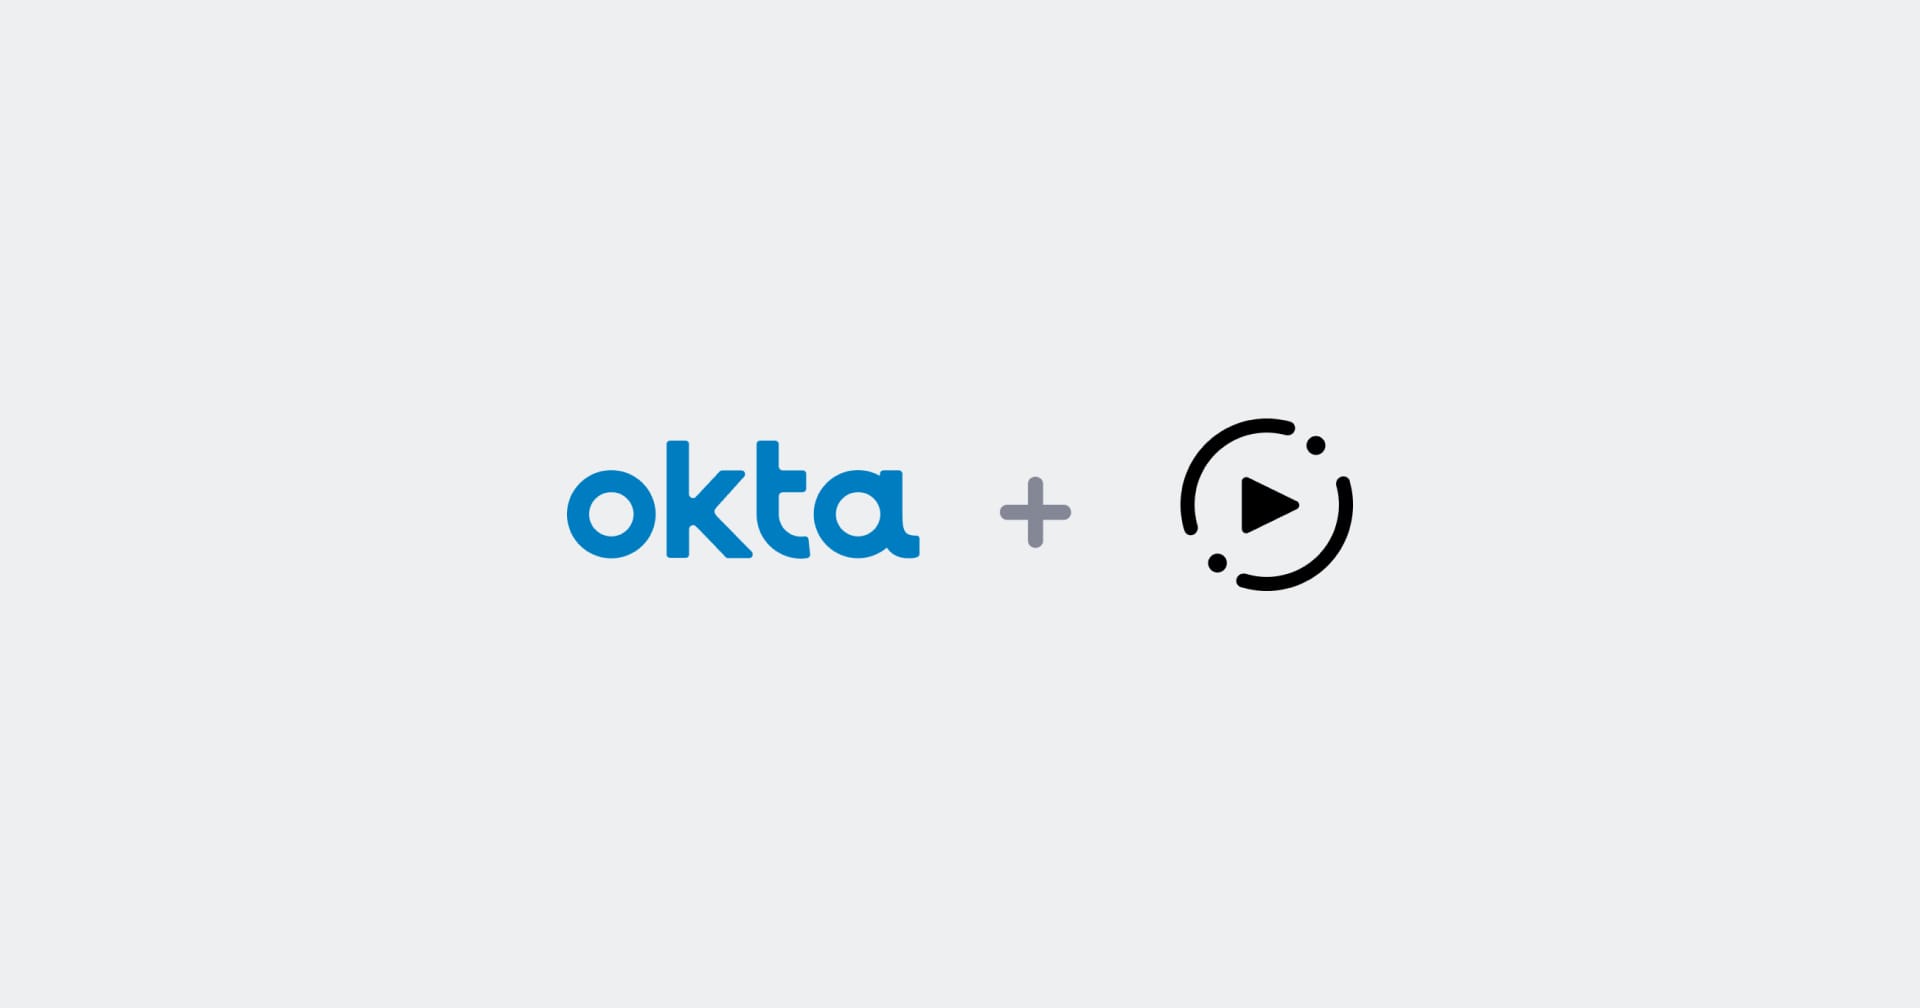 Okta and Rewatch logos